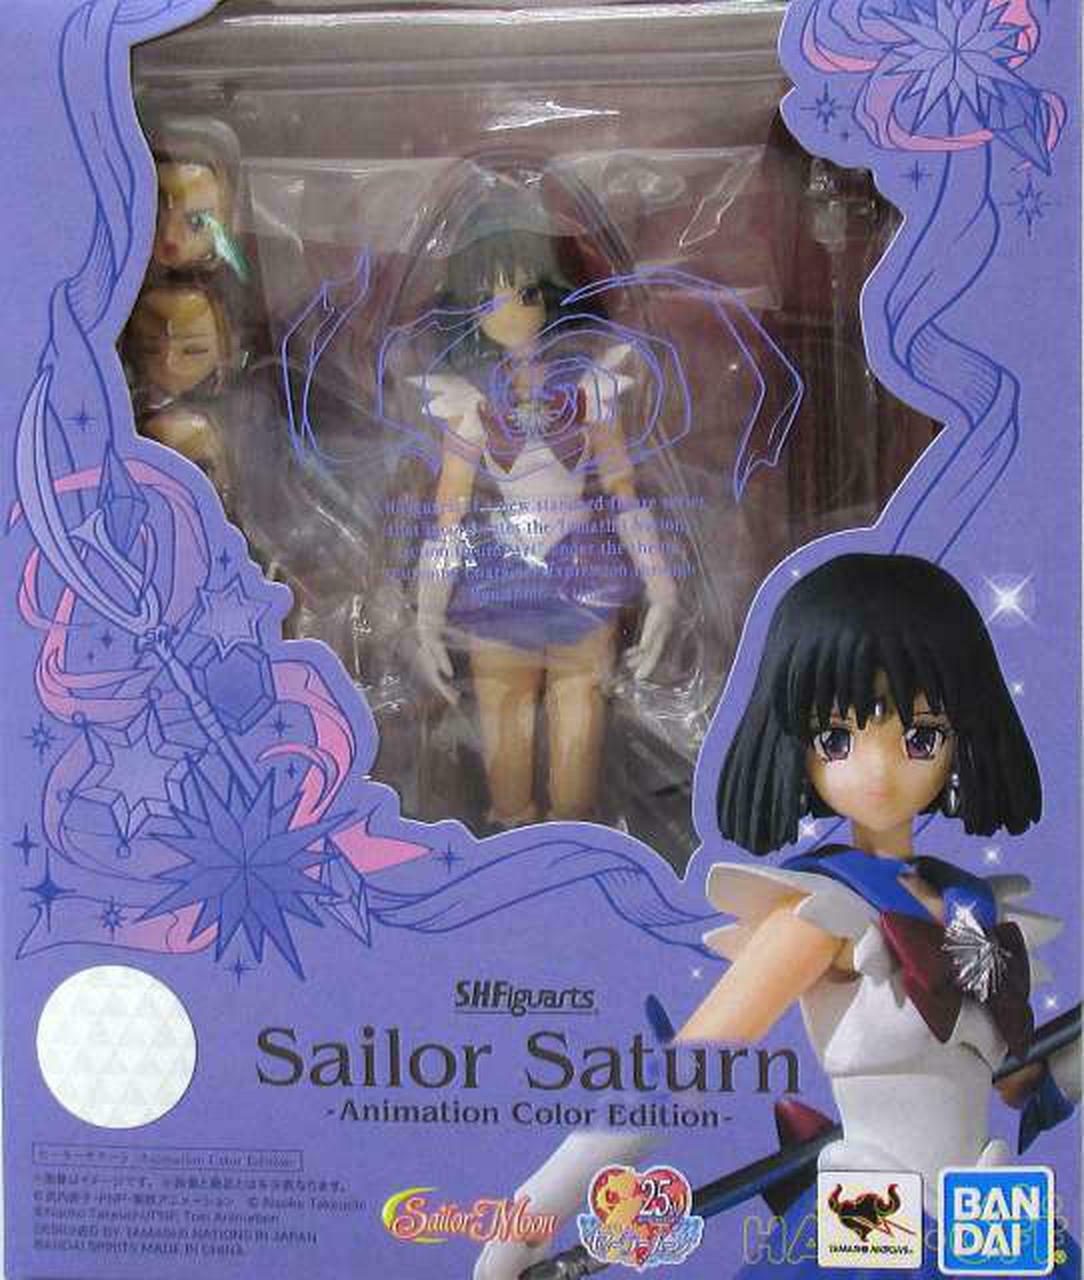 Sailor Saturn Figure, S H Figuarts, Animation Color Edition, 25th Anniversary, Sailor Moon, Bandai